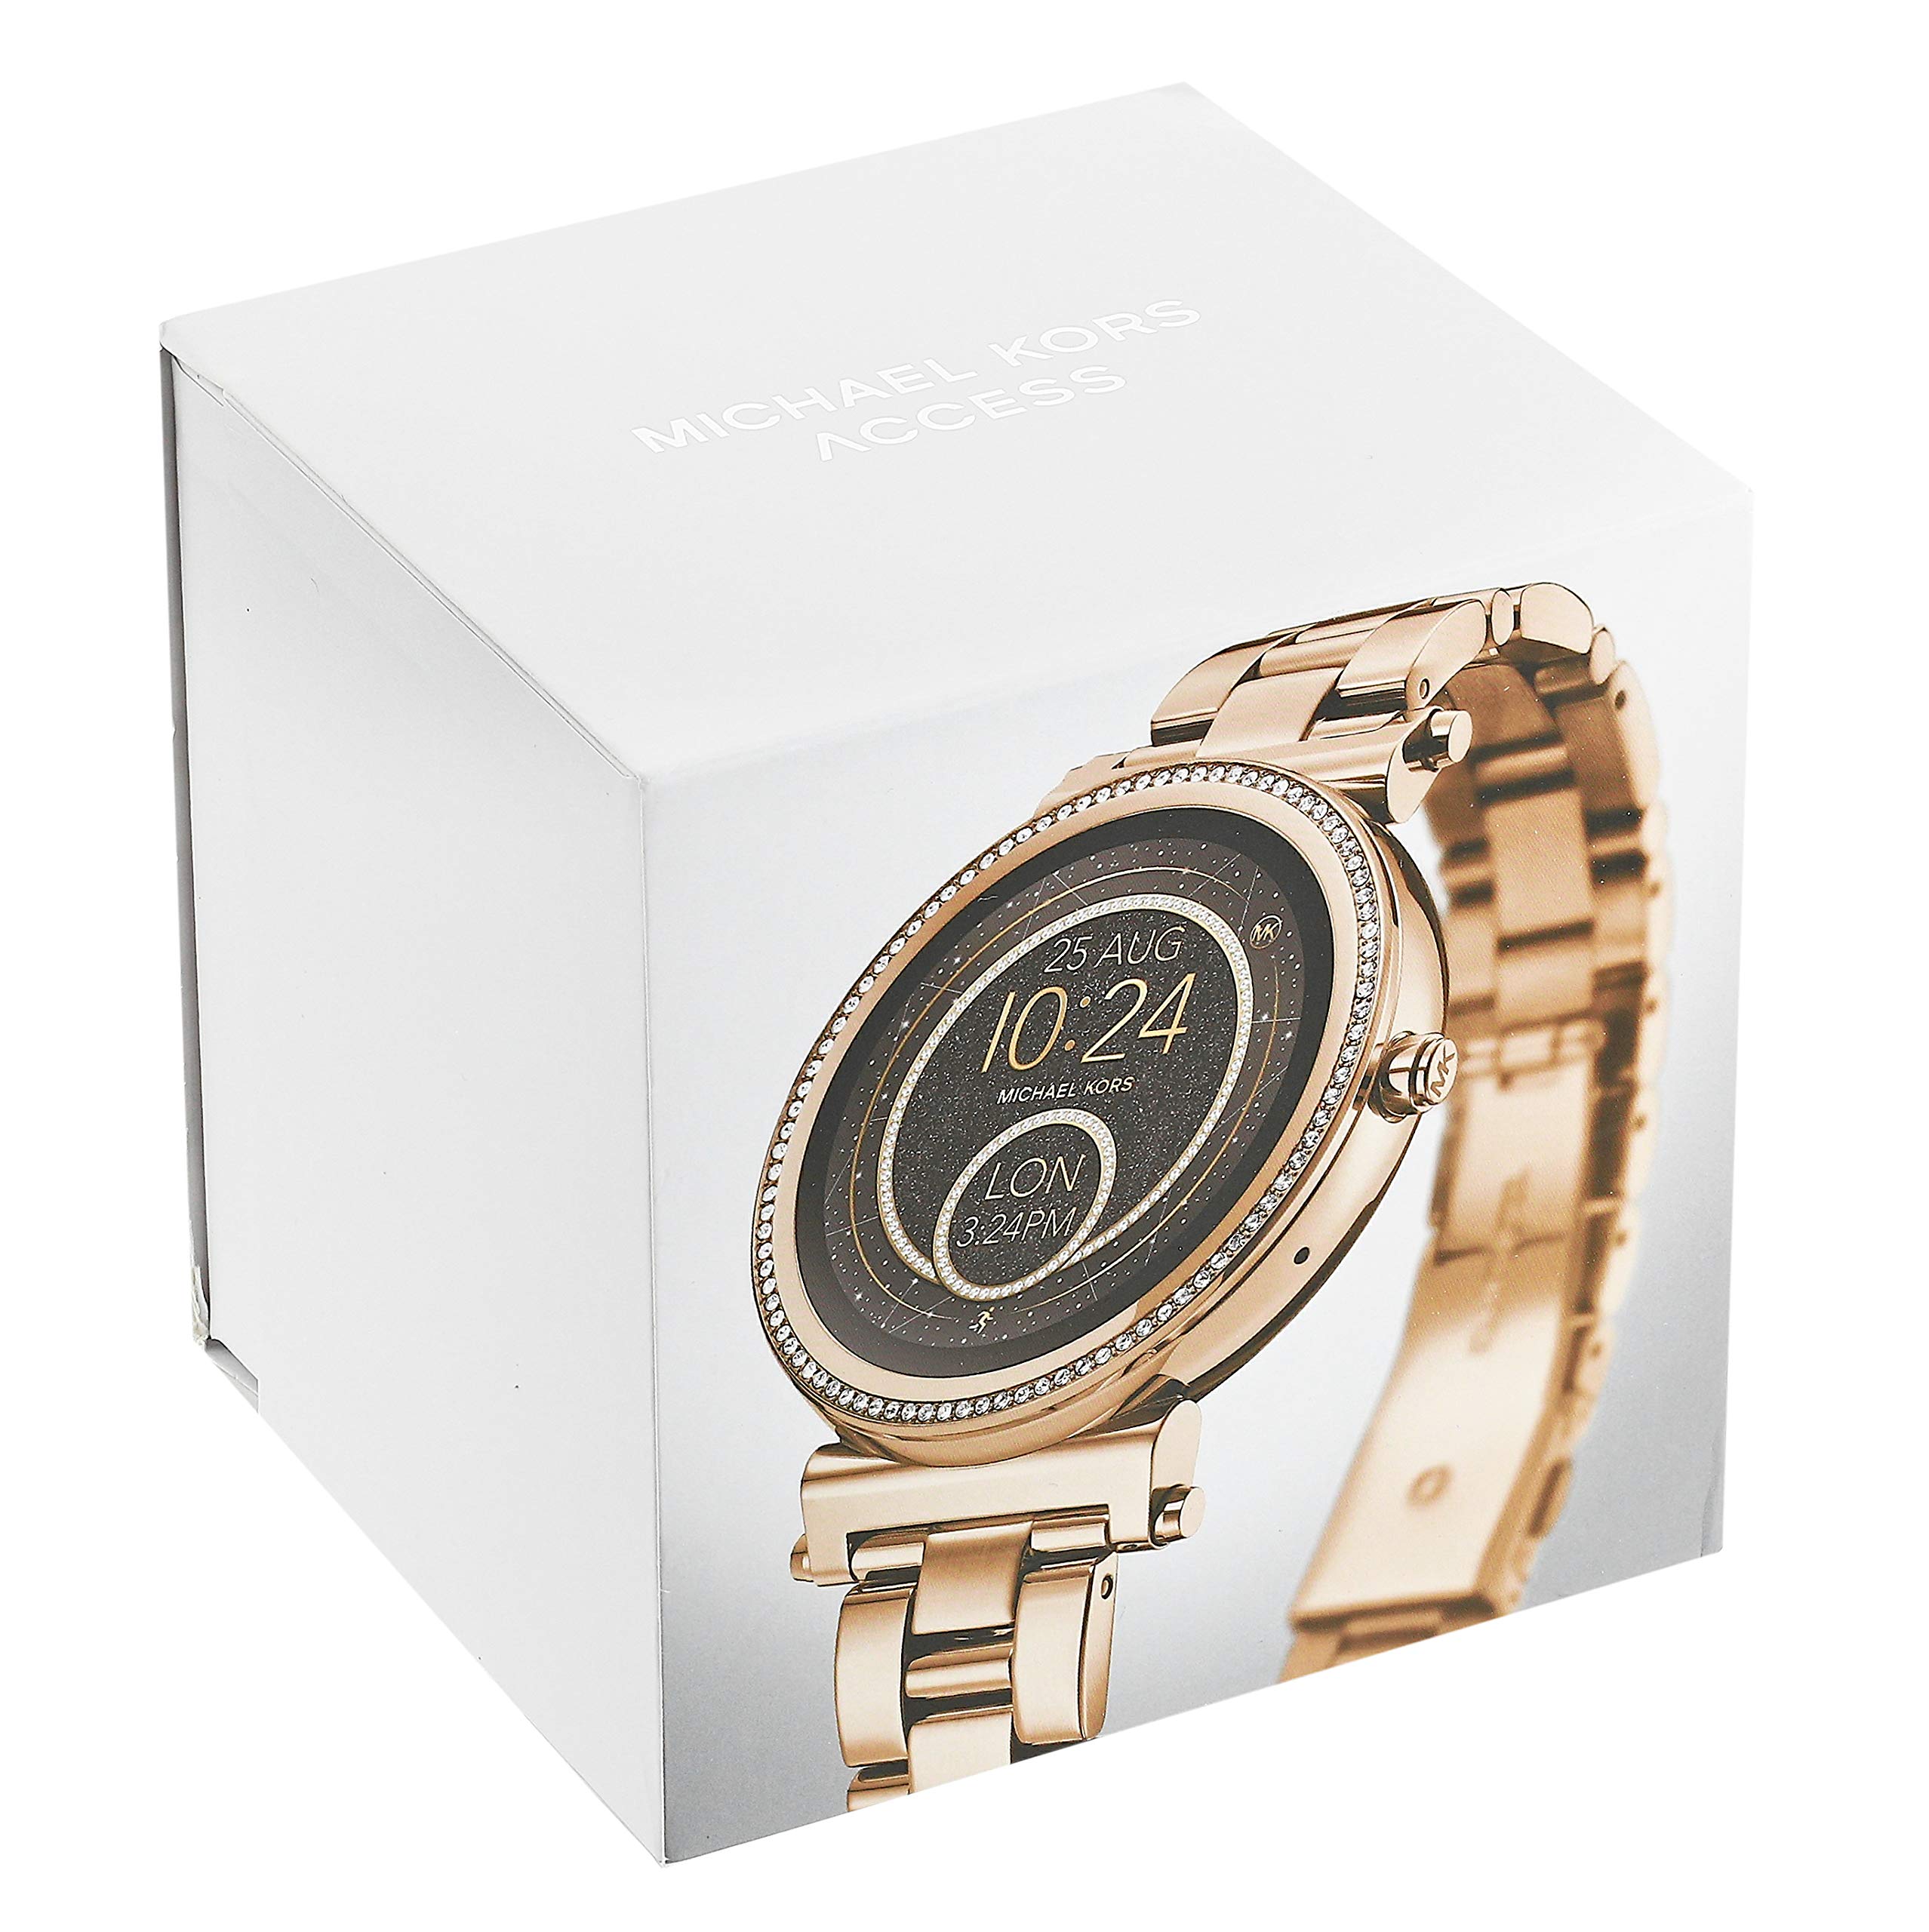 Đồng hồ Michael Kors Access Sofie Smartwatch 42mm MKT5030  likewatchcom